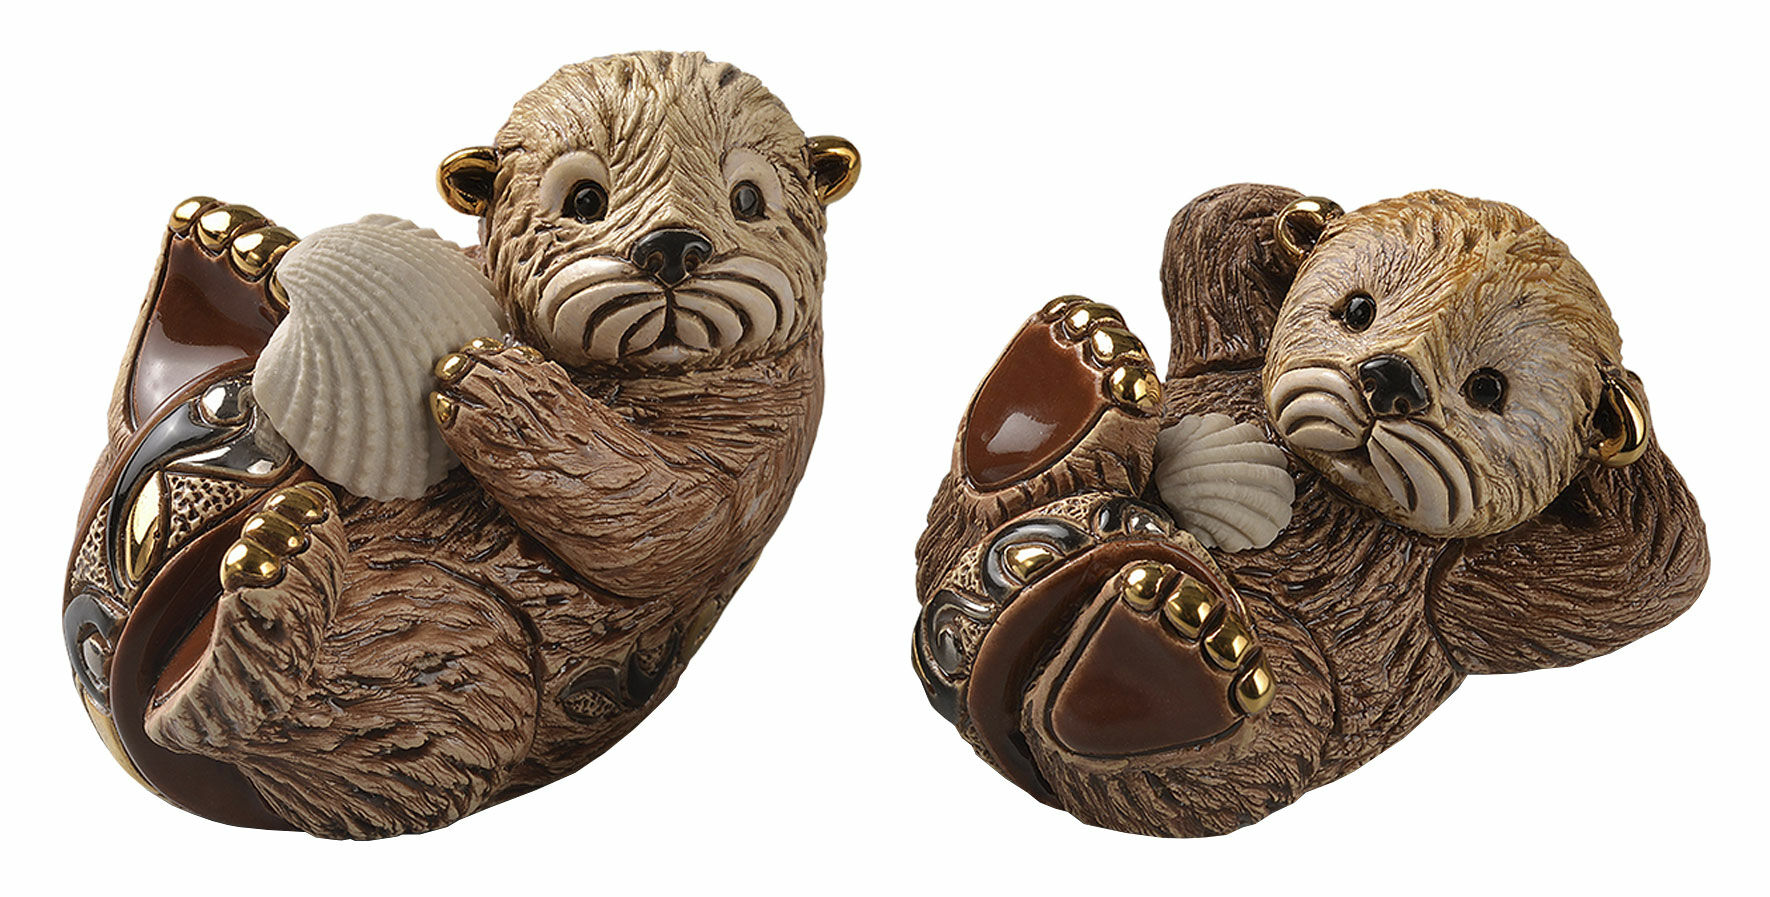 Set of 2 ceramic figures "Otters"